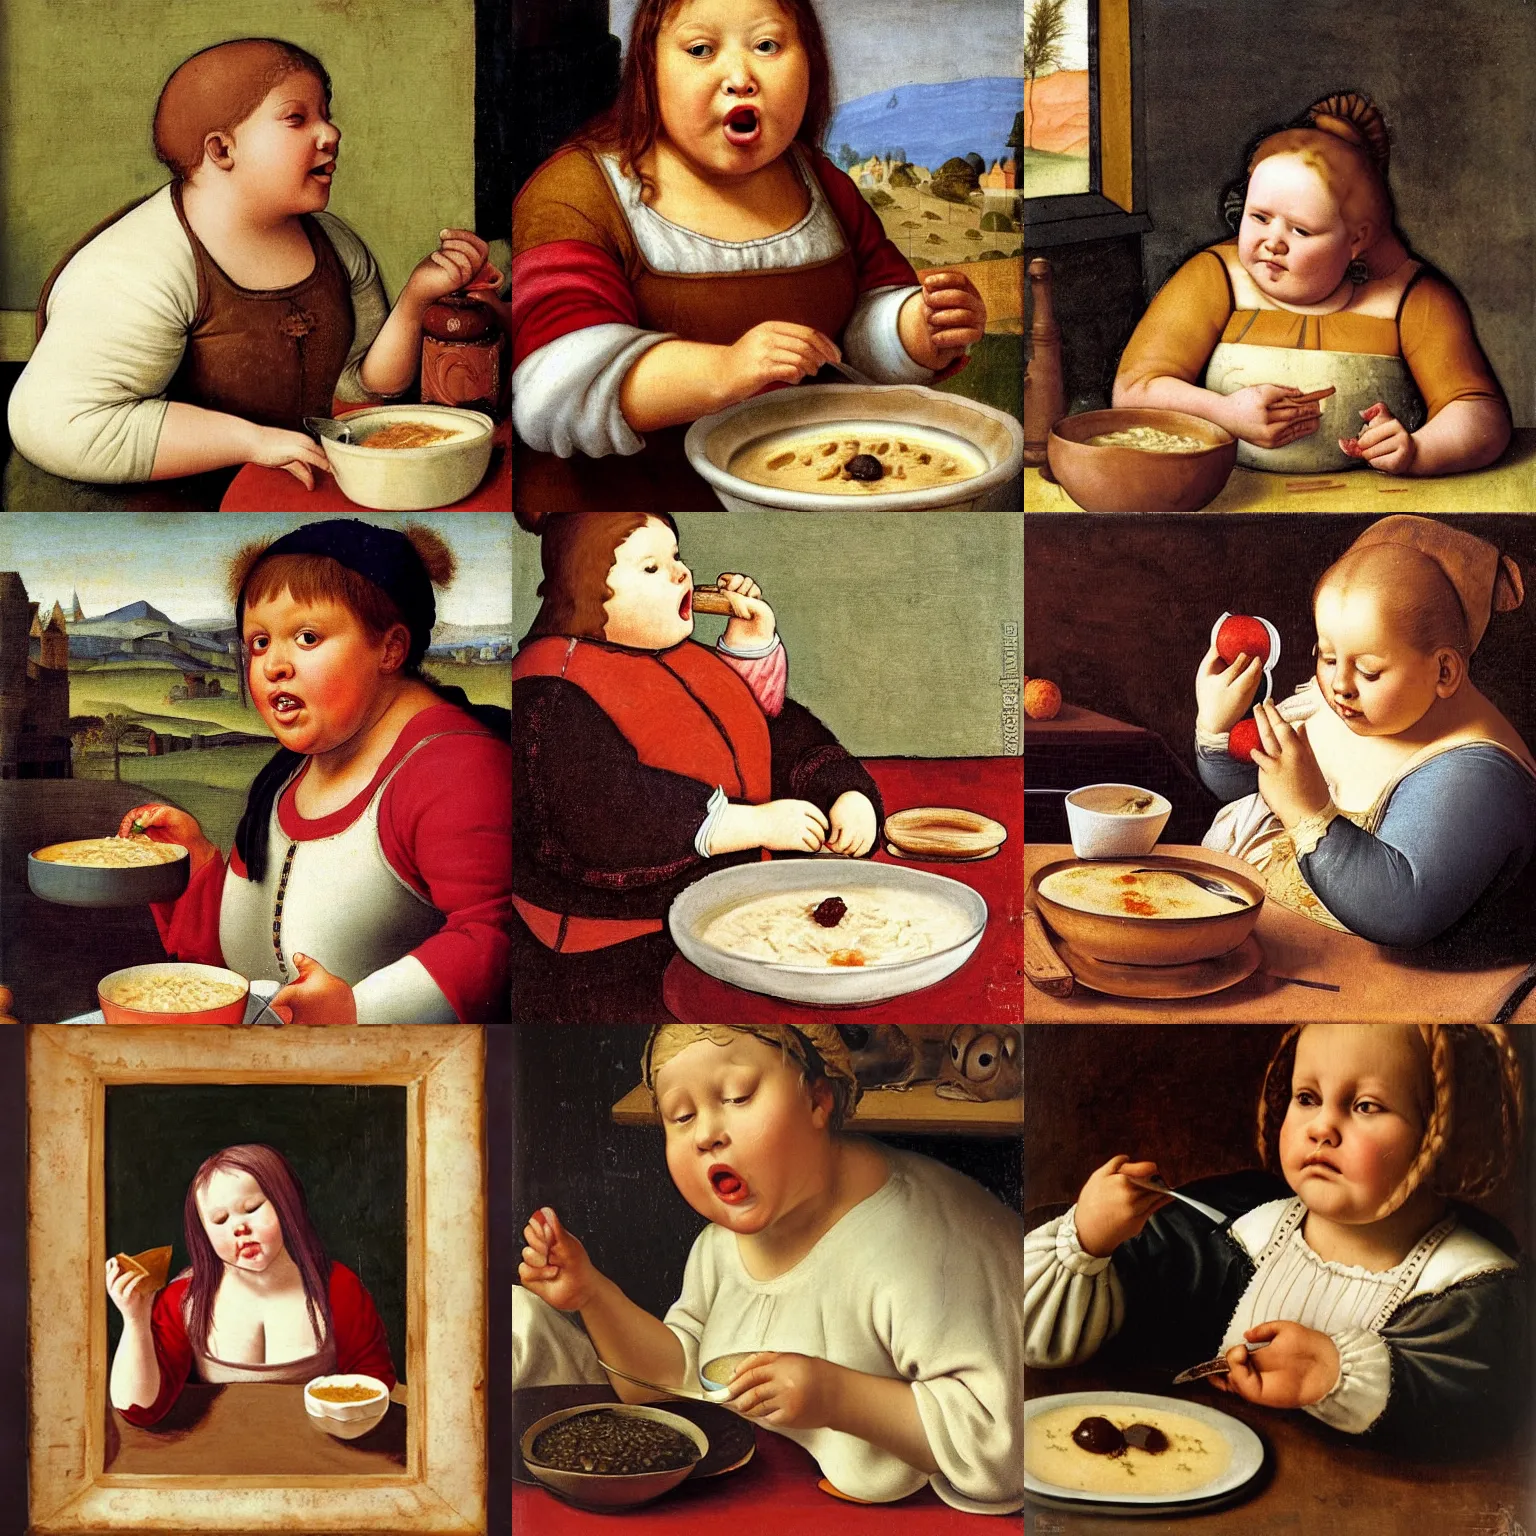 Prompt: a chubby girl eating porridge painfully, renaissance